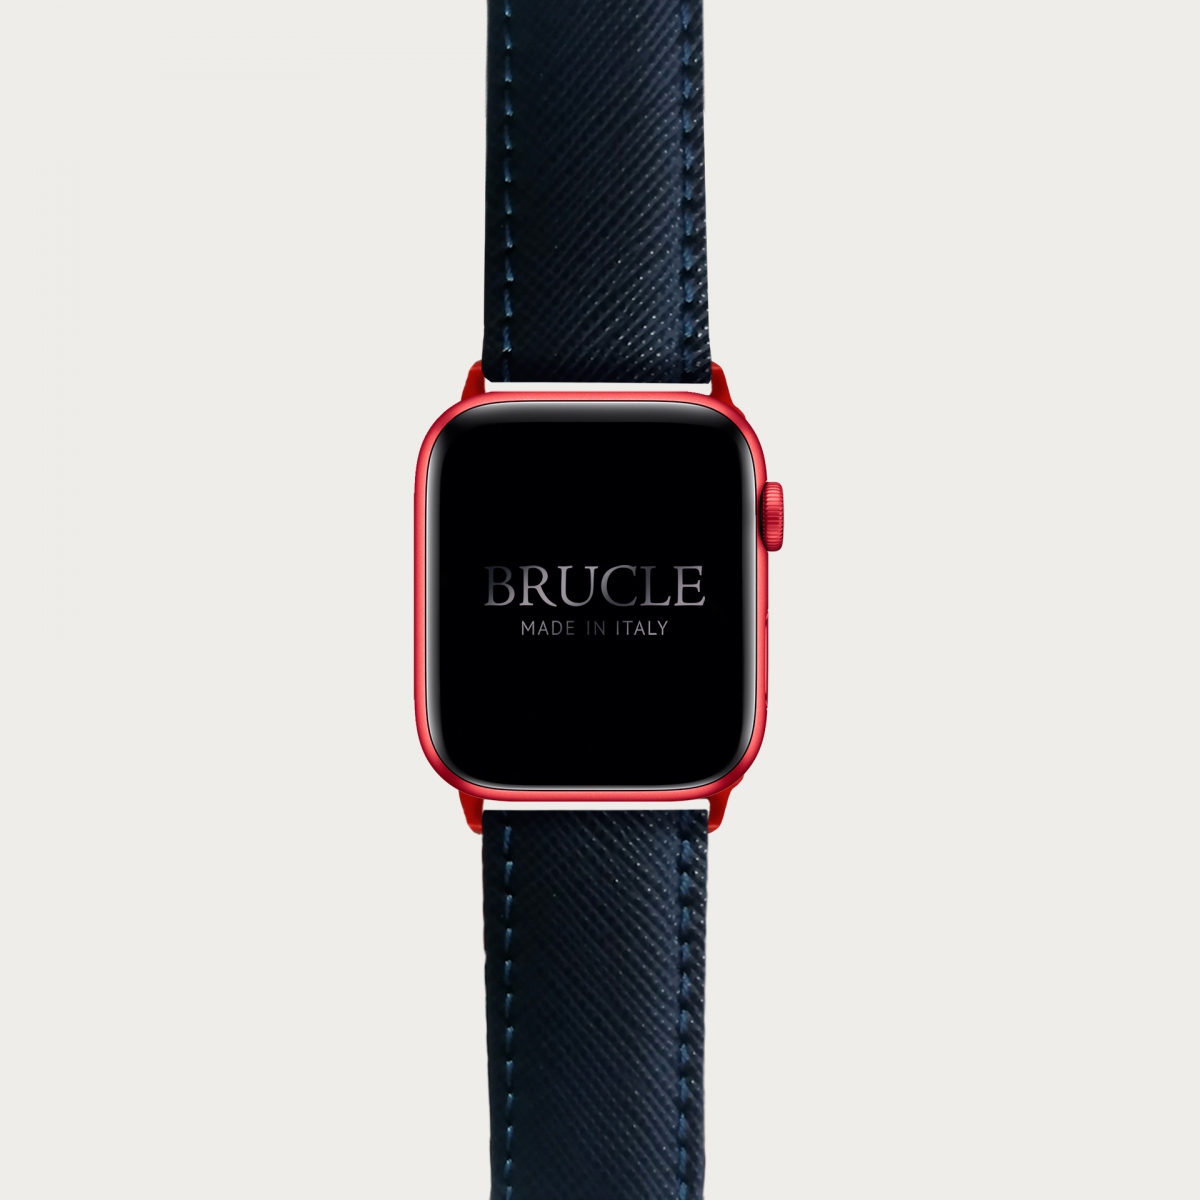 Armband kompatibel mit Apple Watch / Samsung Smartwatch, Navy blue, leder mit Saffiano-print